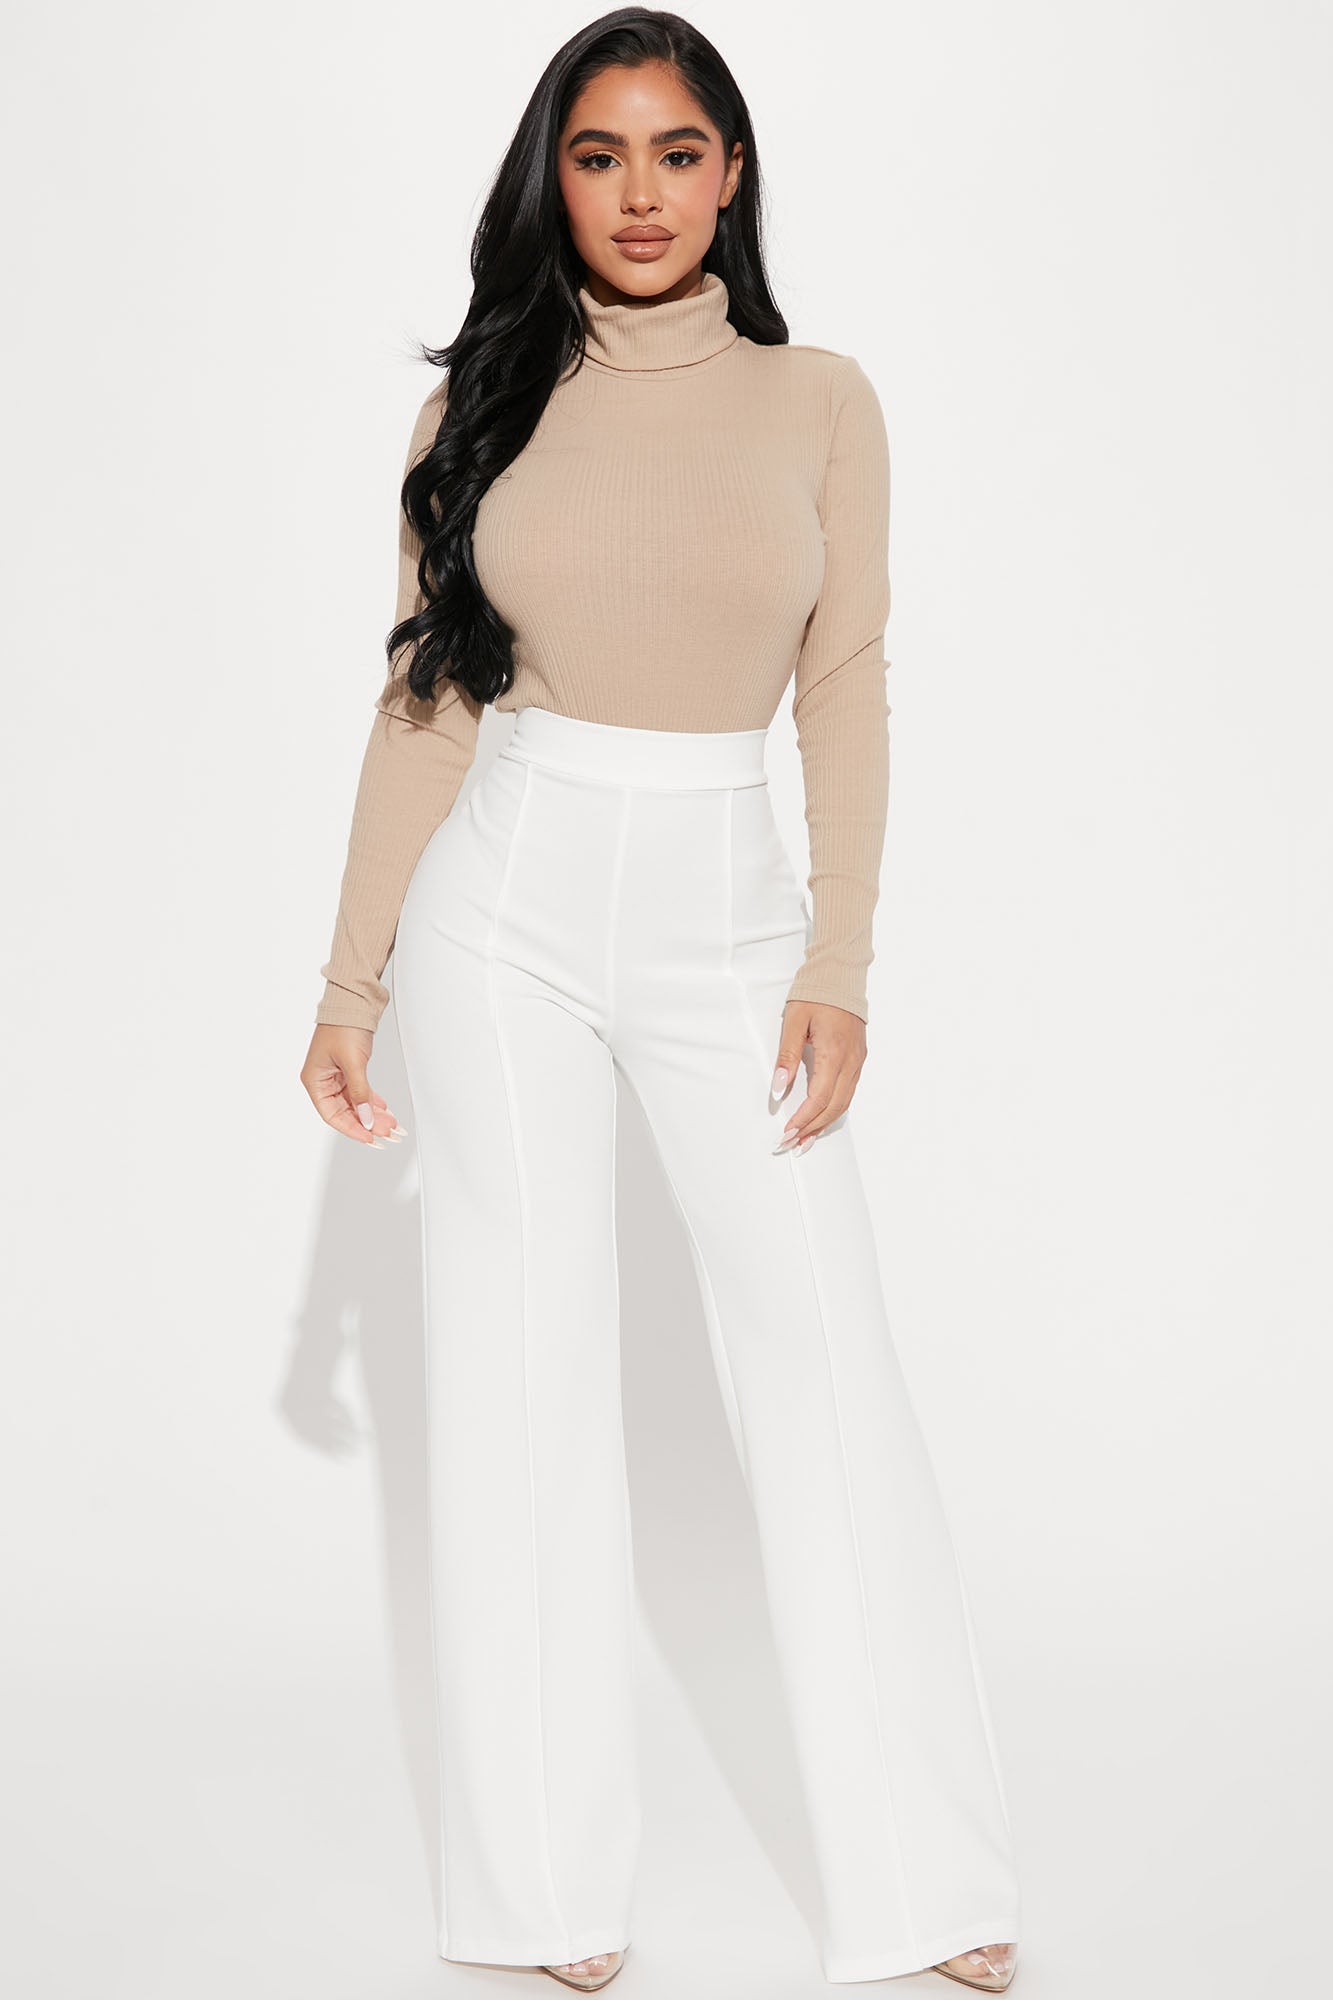 OHIL Women's Dress Pants Streetwear White Women's Ripped Jeans High Waisted  Cotton Sweatpants Joggers Women Trousers Fashion Pockets Pants (Size :  Small) price in Saudi Arabia | Amazon Saudi Arabia | kanbkam